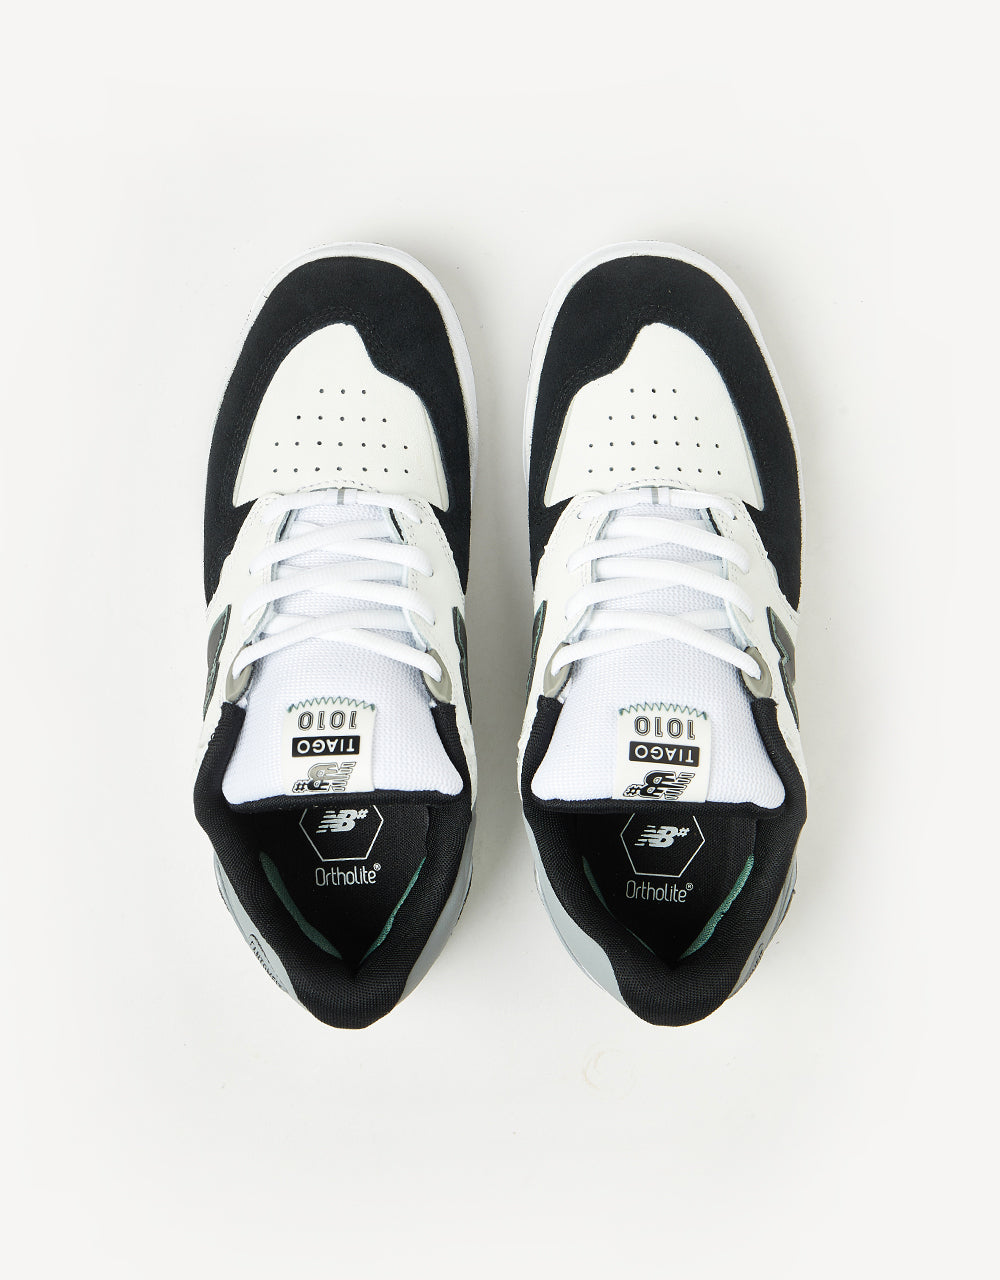 New Balance Numeric 1010 Skate Shoes - White/Black